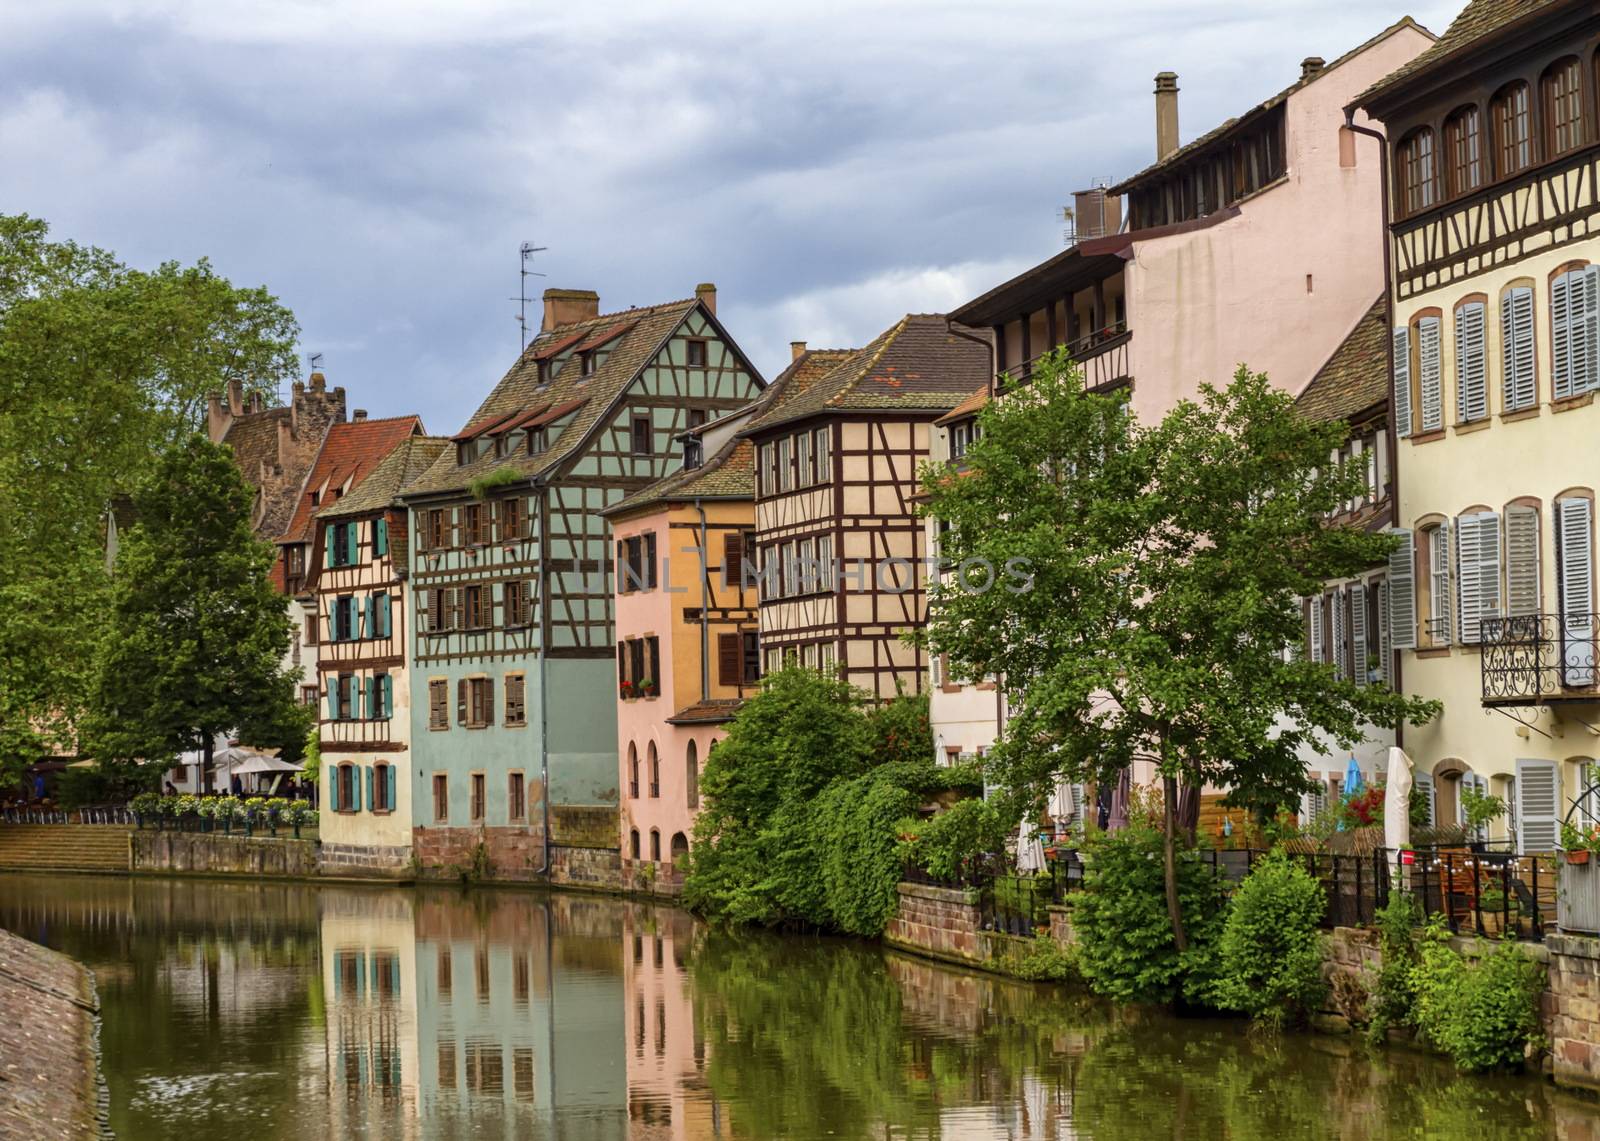 Petite France, Strasbourg by Elenaphotos21